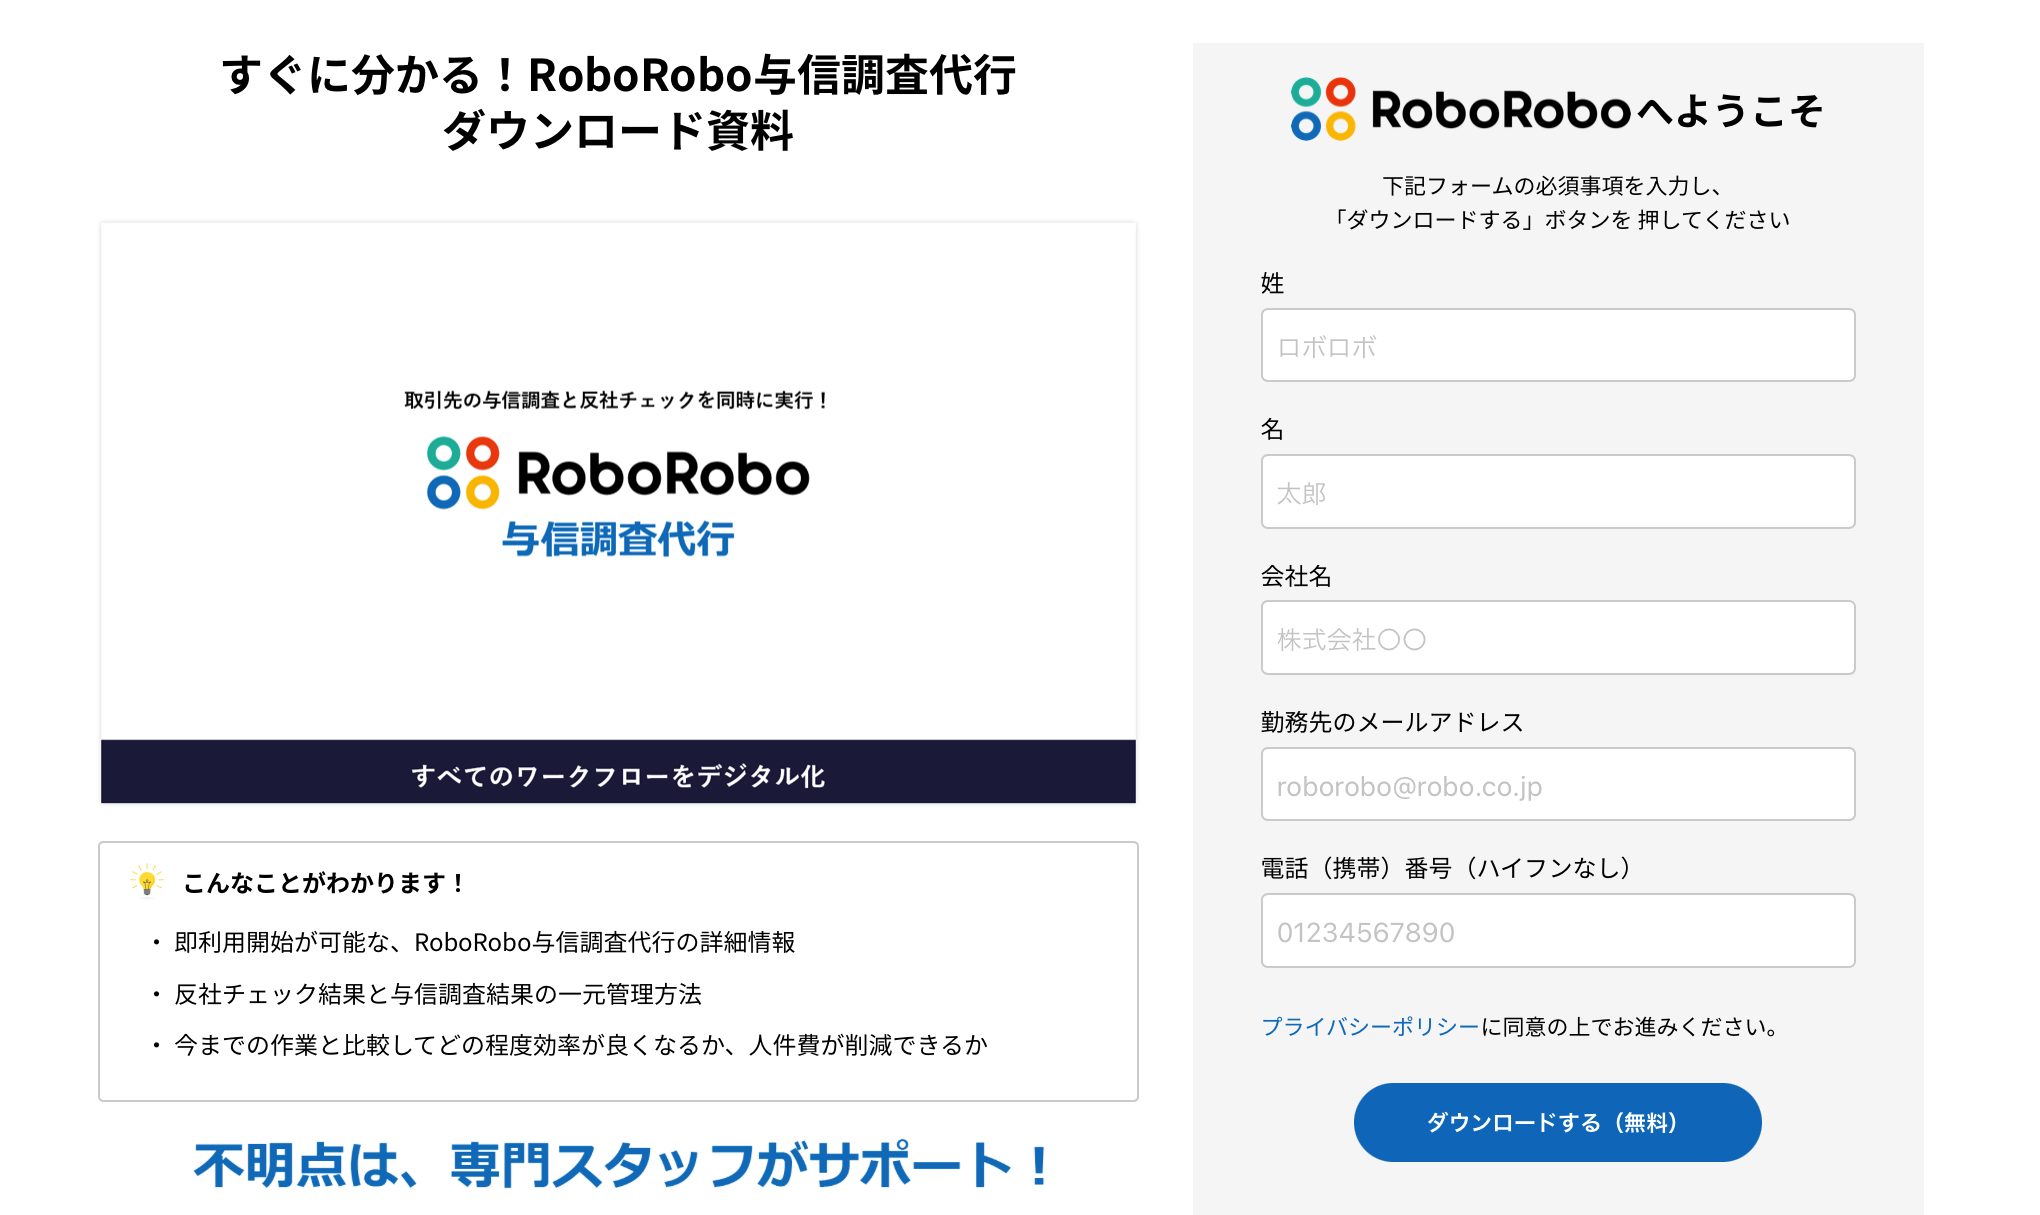 roborobo与信調査代行の無料資料請求の申し込み方法_申込みフォームに必要事項を入力する